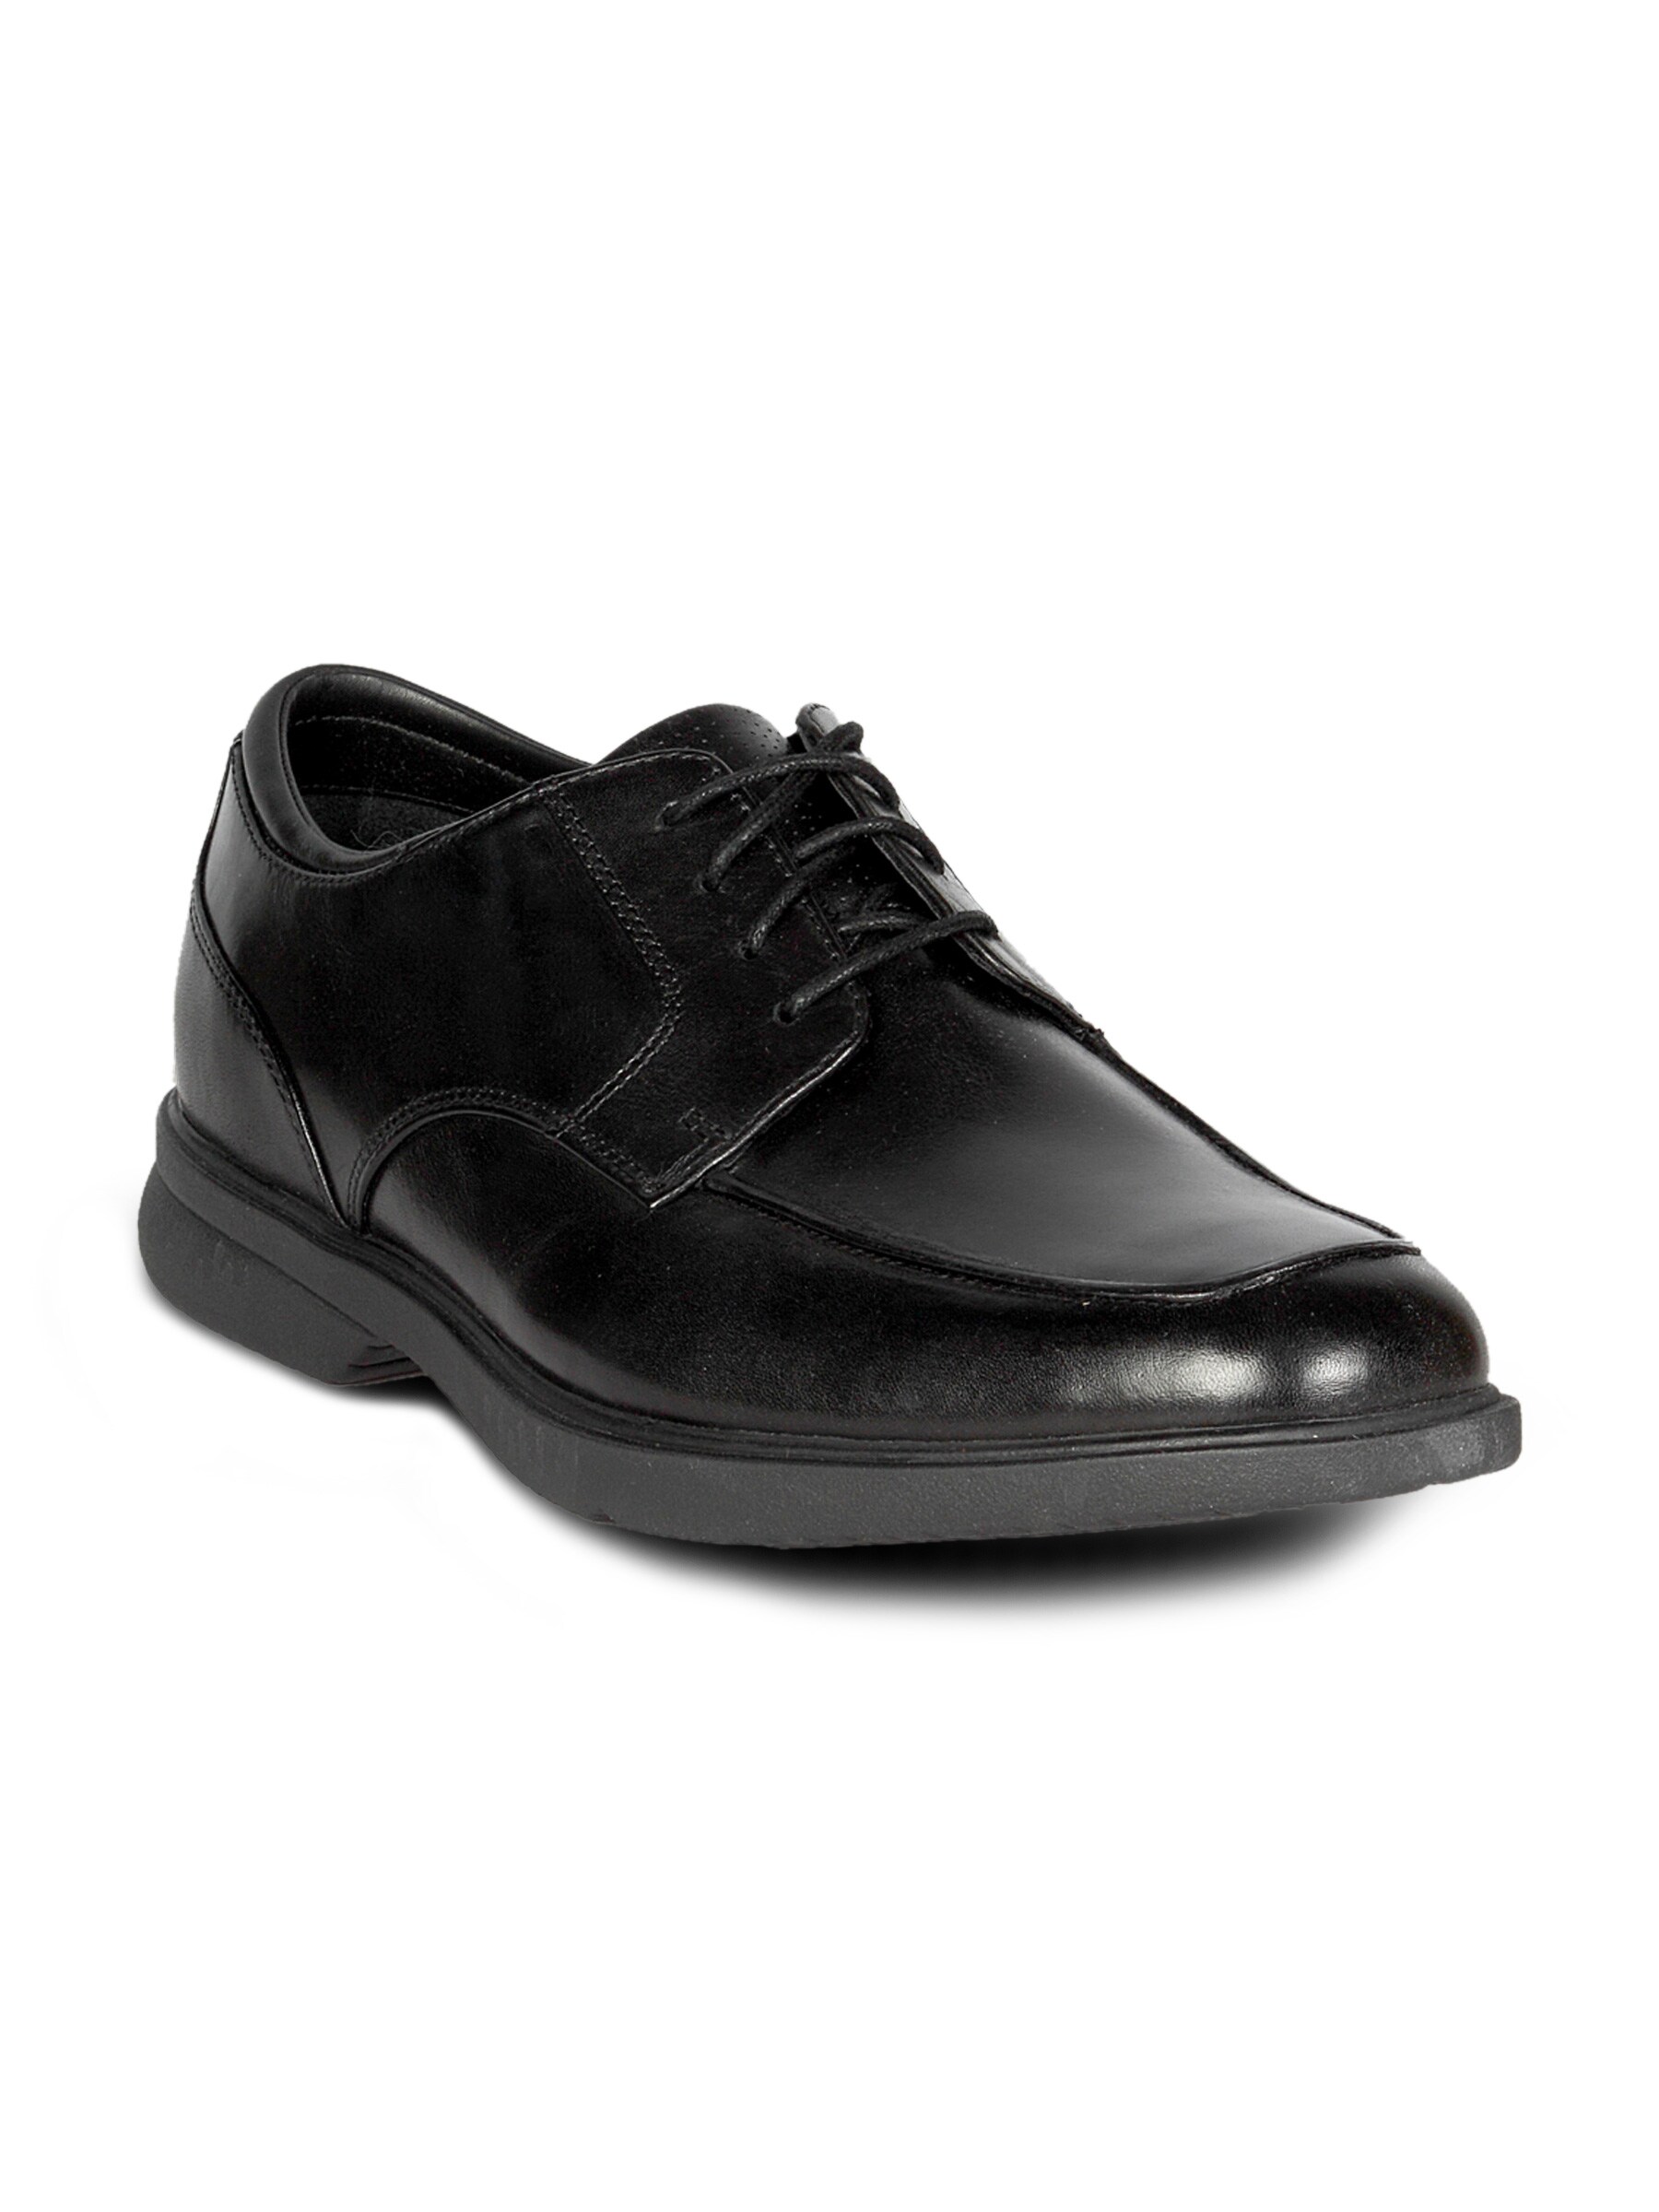 Rockport Men's Ananti Black Formal Shoe